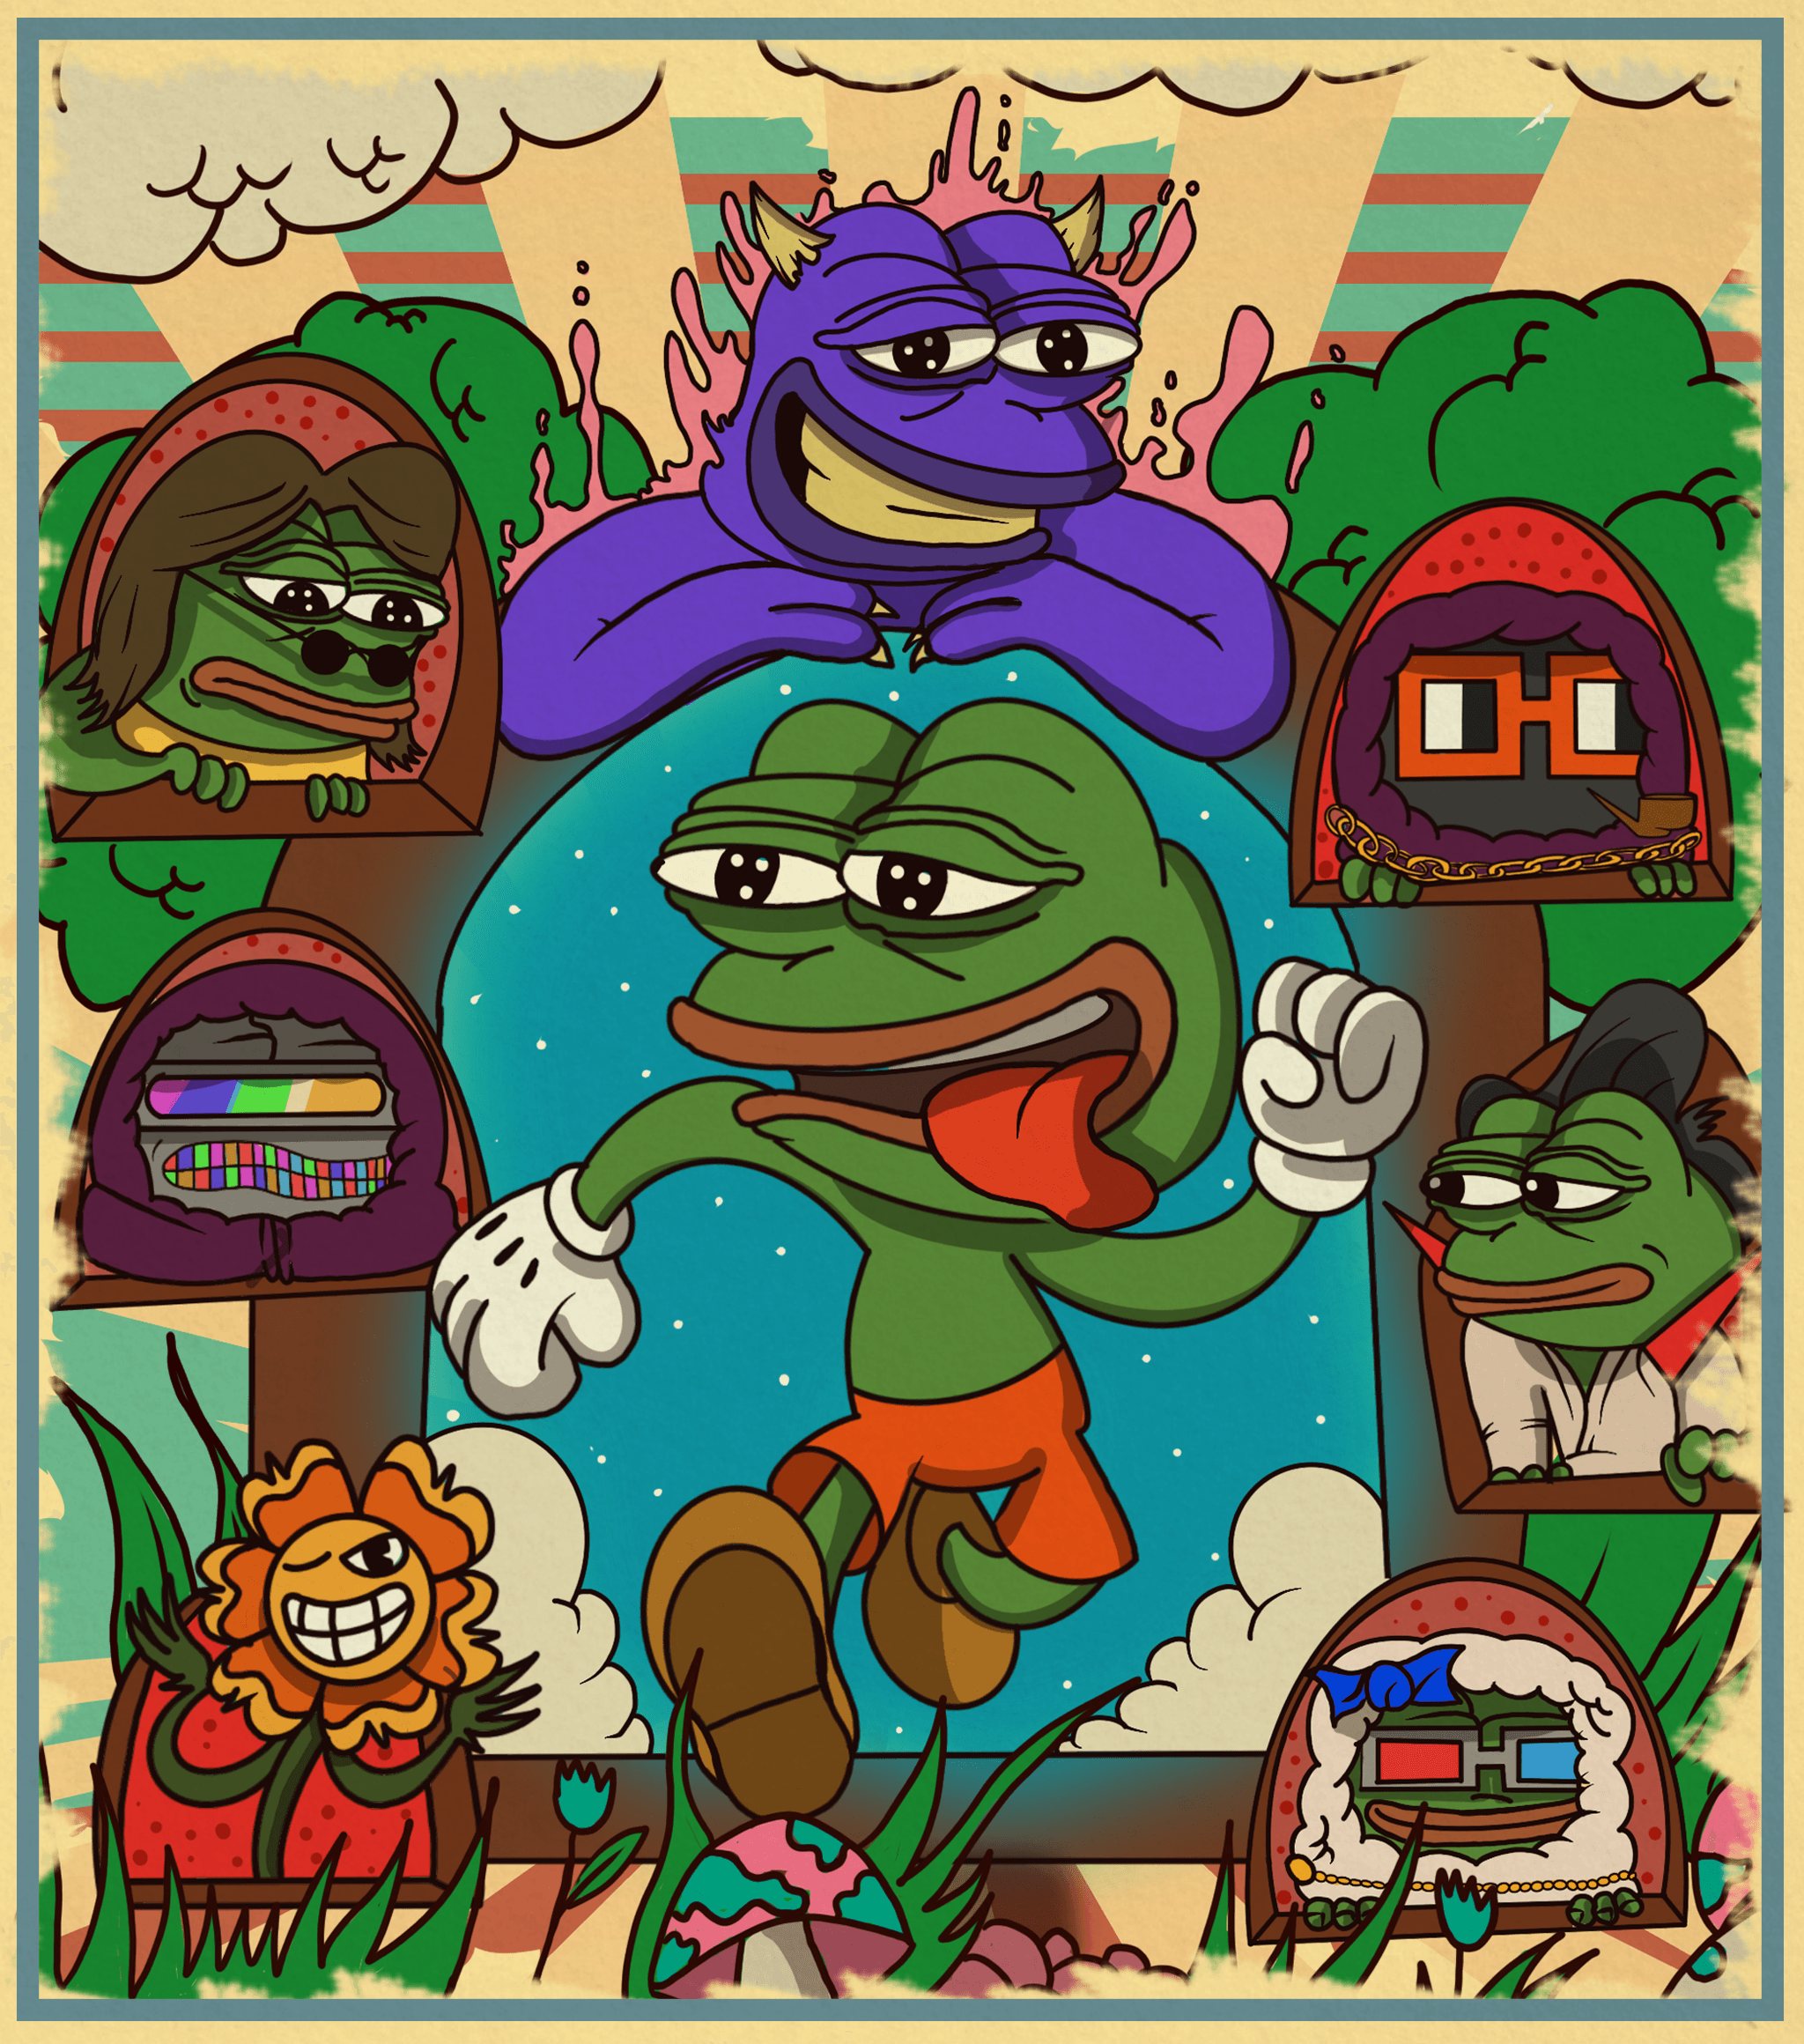 Multiverse of Pepe